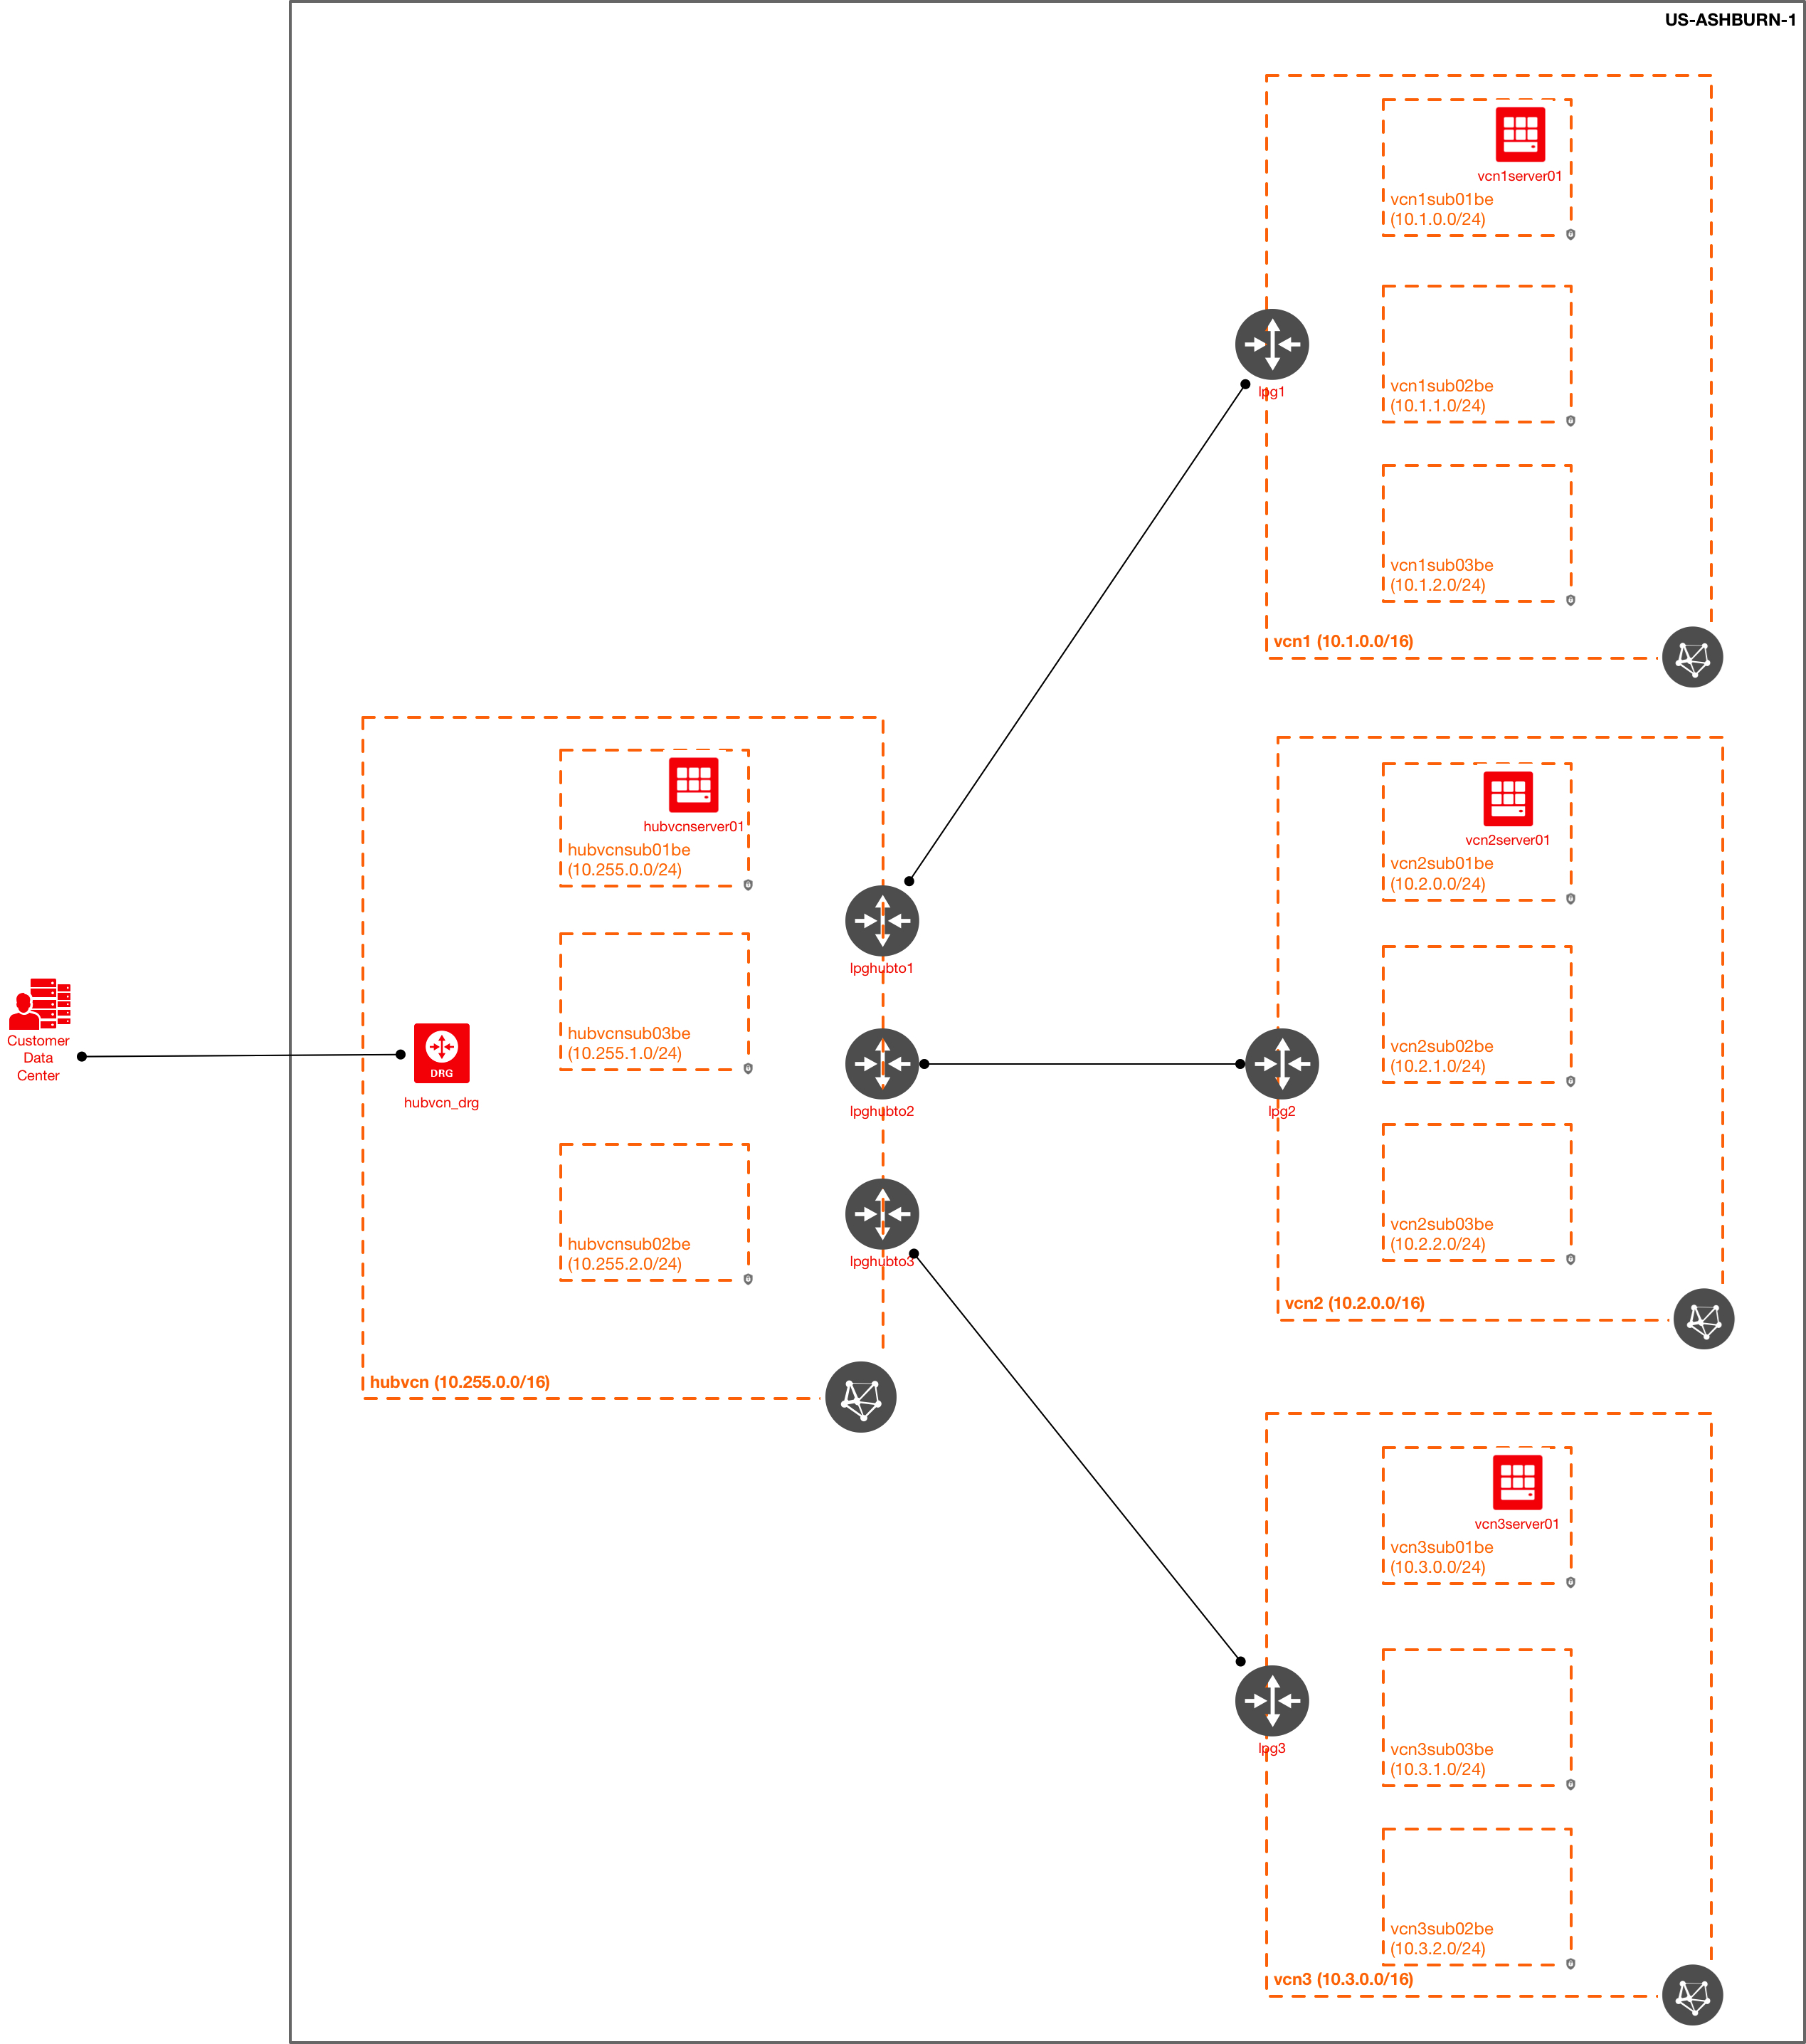 TransitVCN_topology_diagram